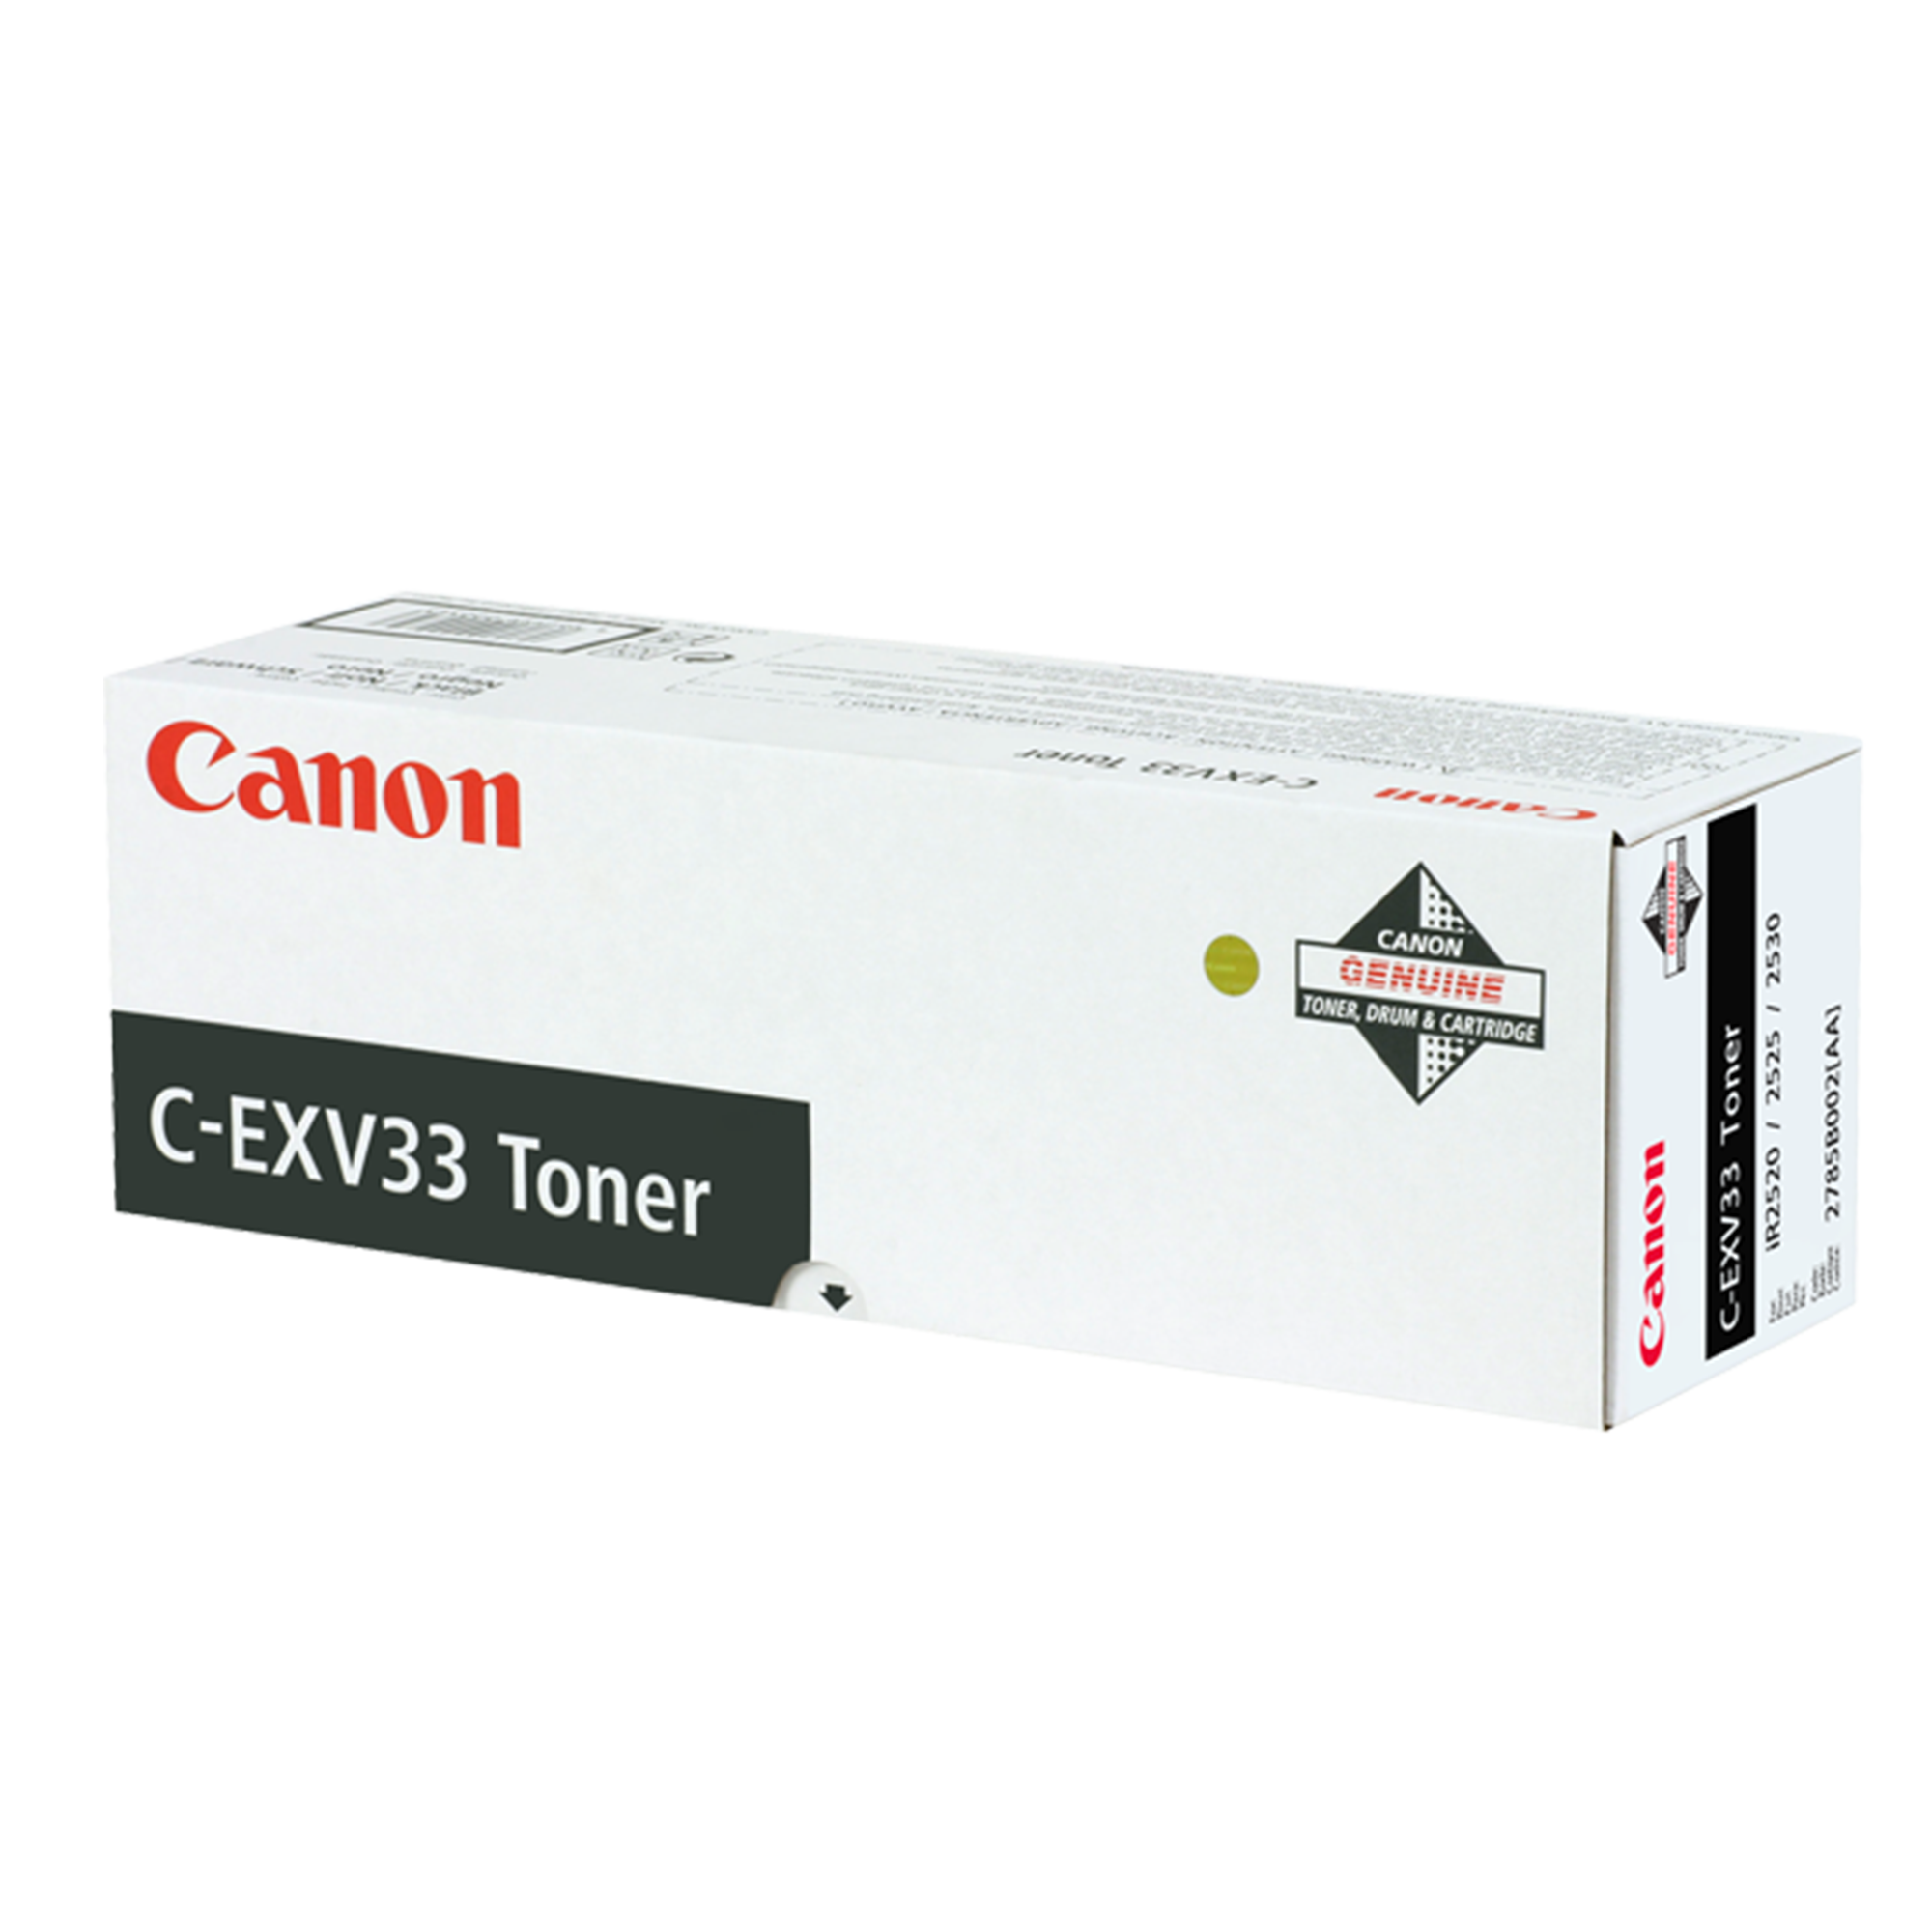 Canon C-EXV 33 Toner BK